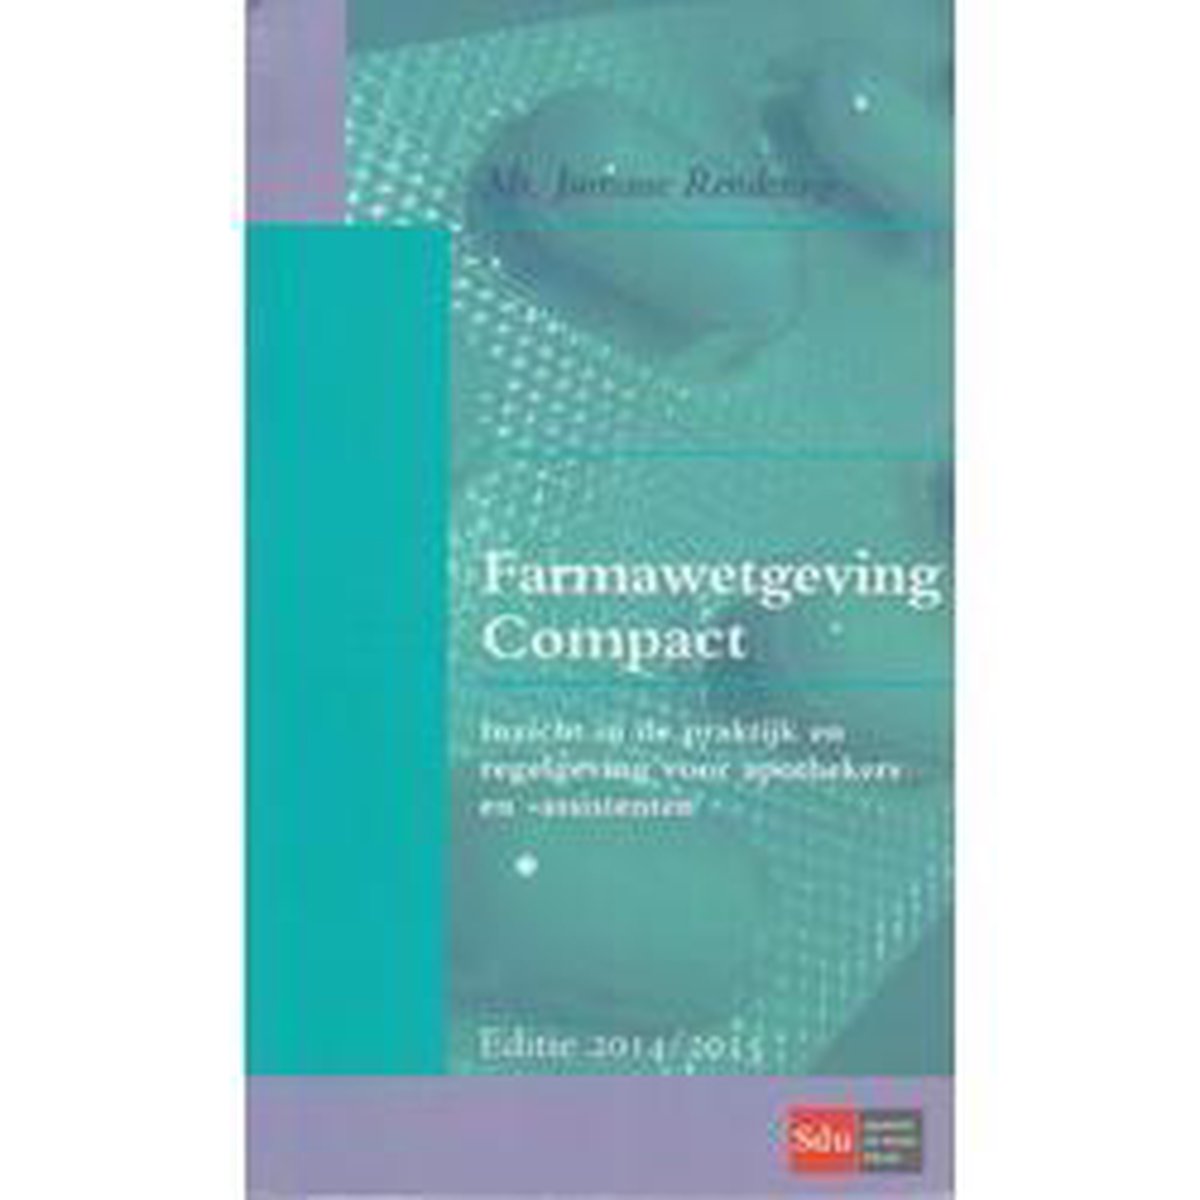 Farmawetgeving compact 2014/2015